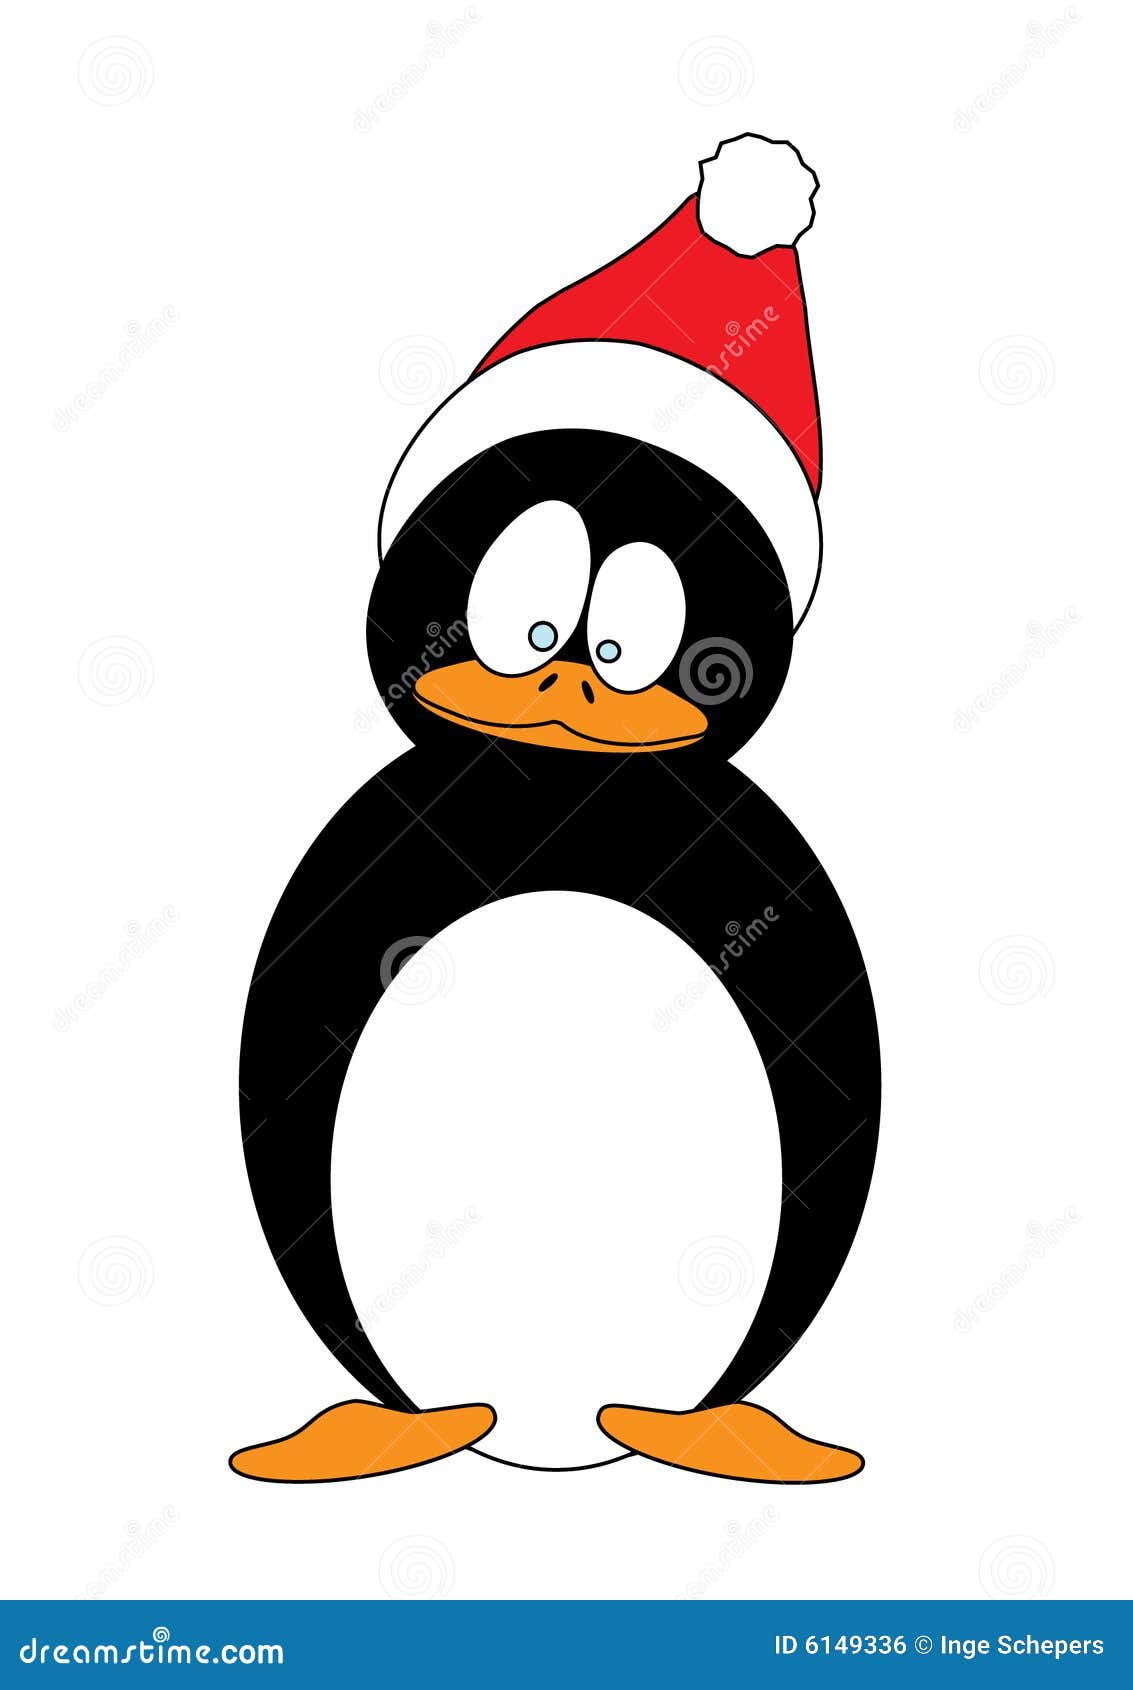 image libre de droits dessin anim de pingouin de nol image